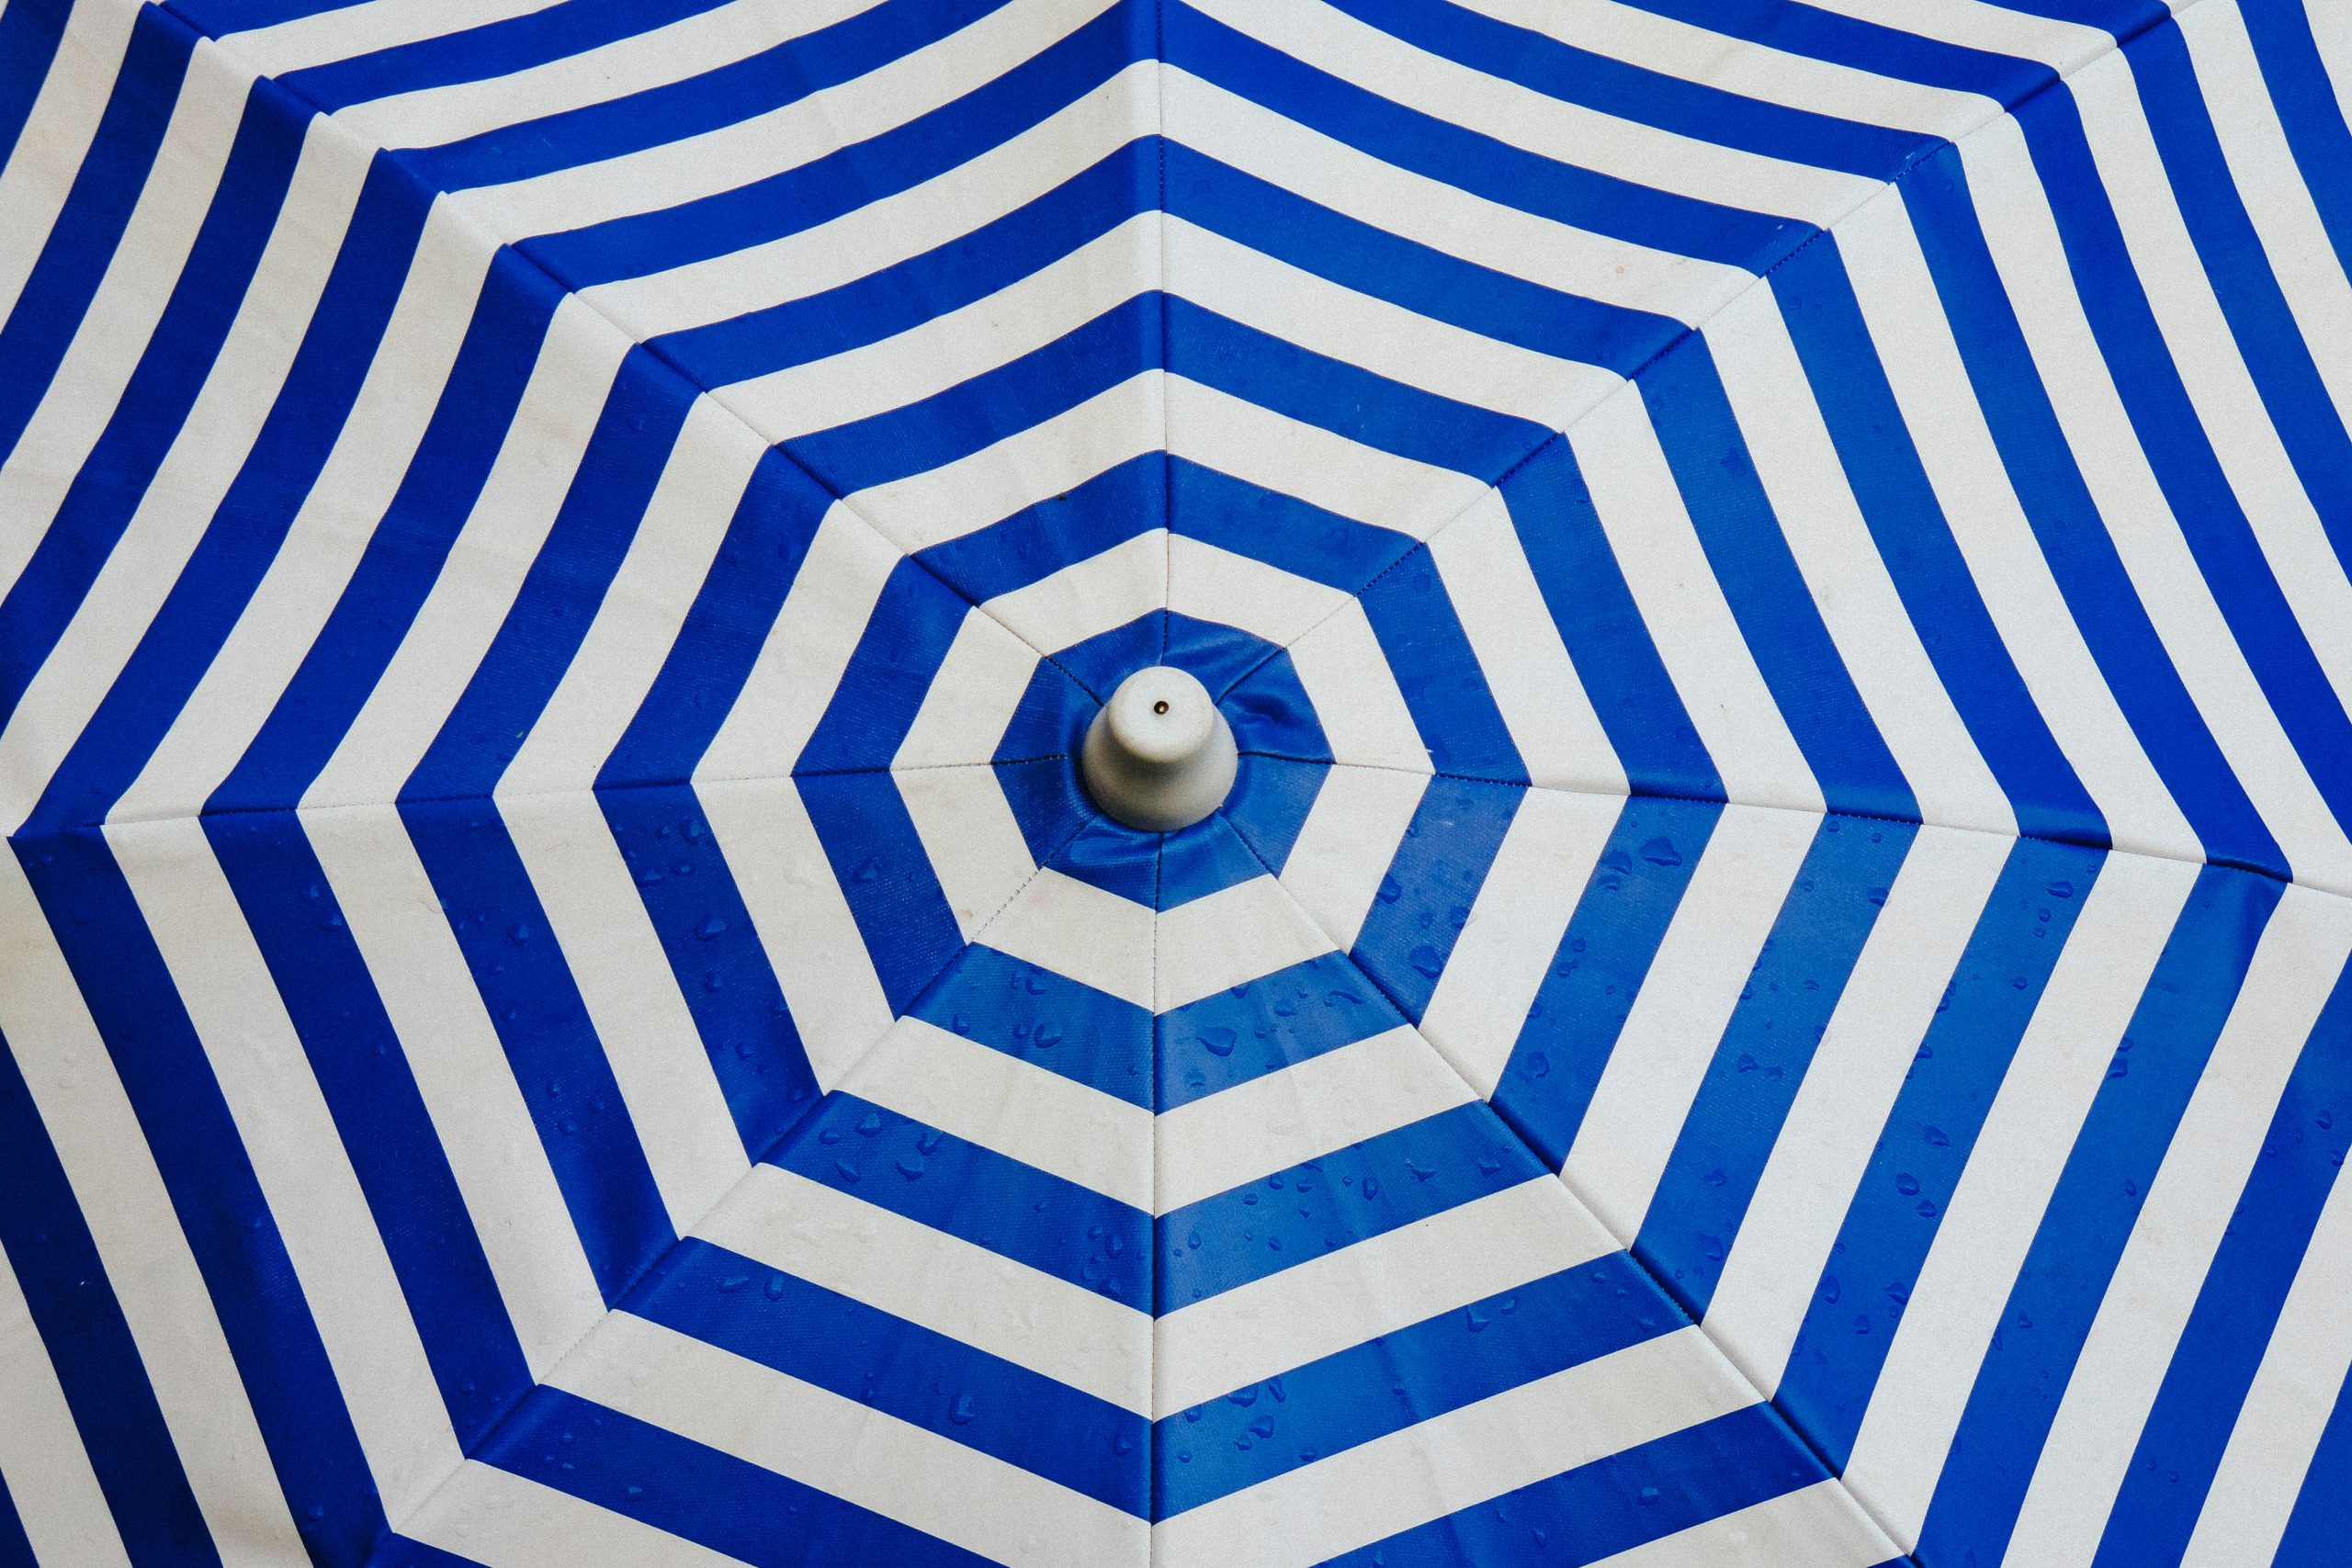 beto-galetto-unsplash- pattern-fractal-umbrella